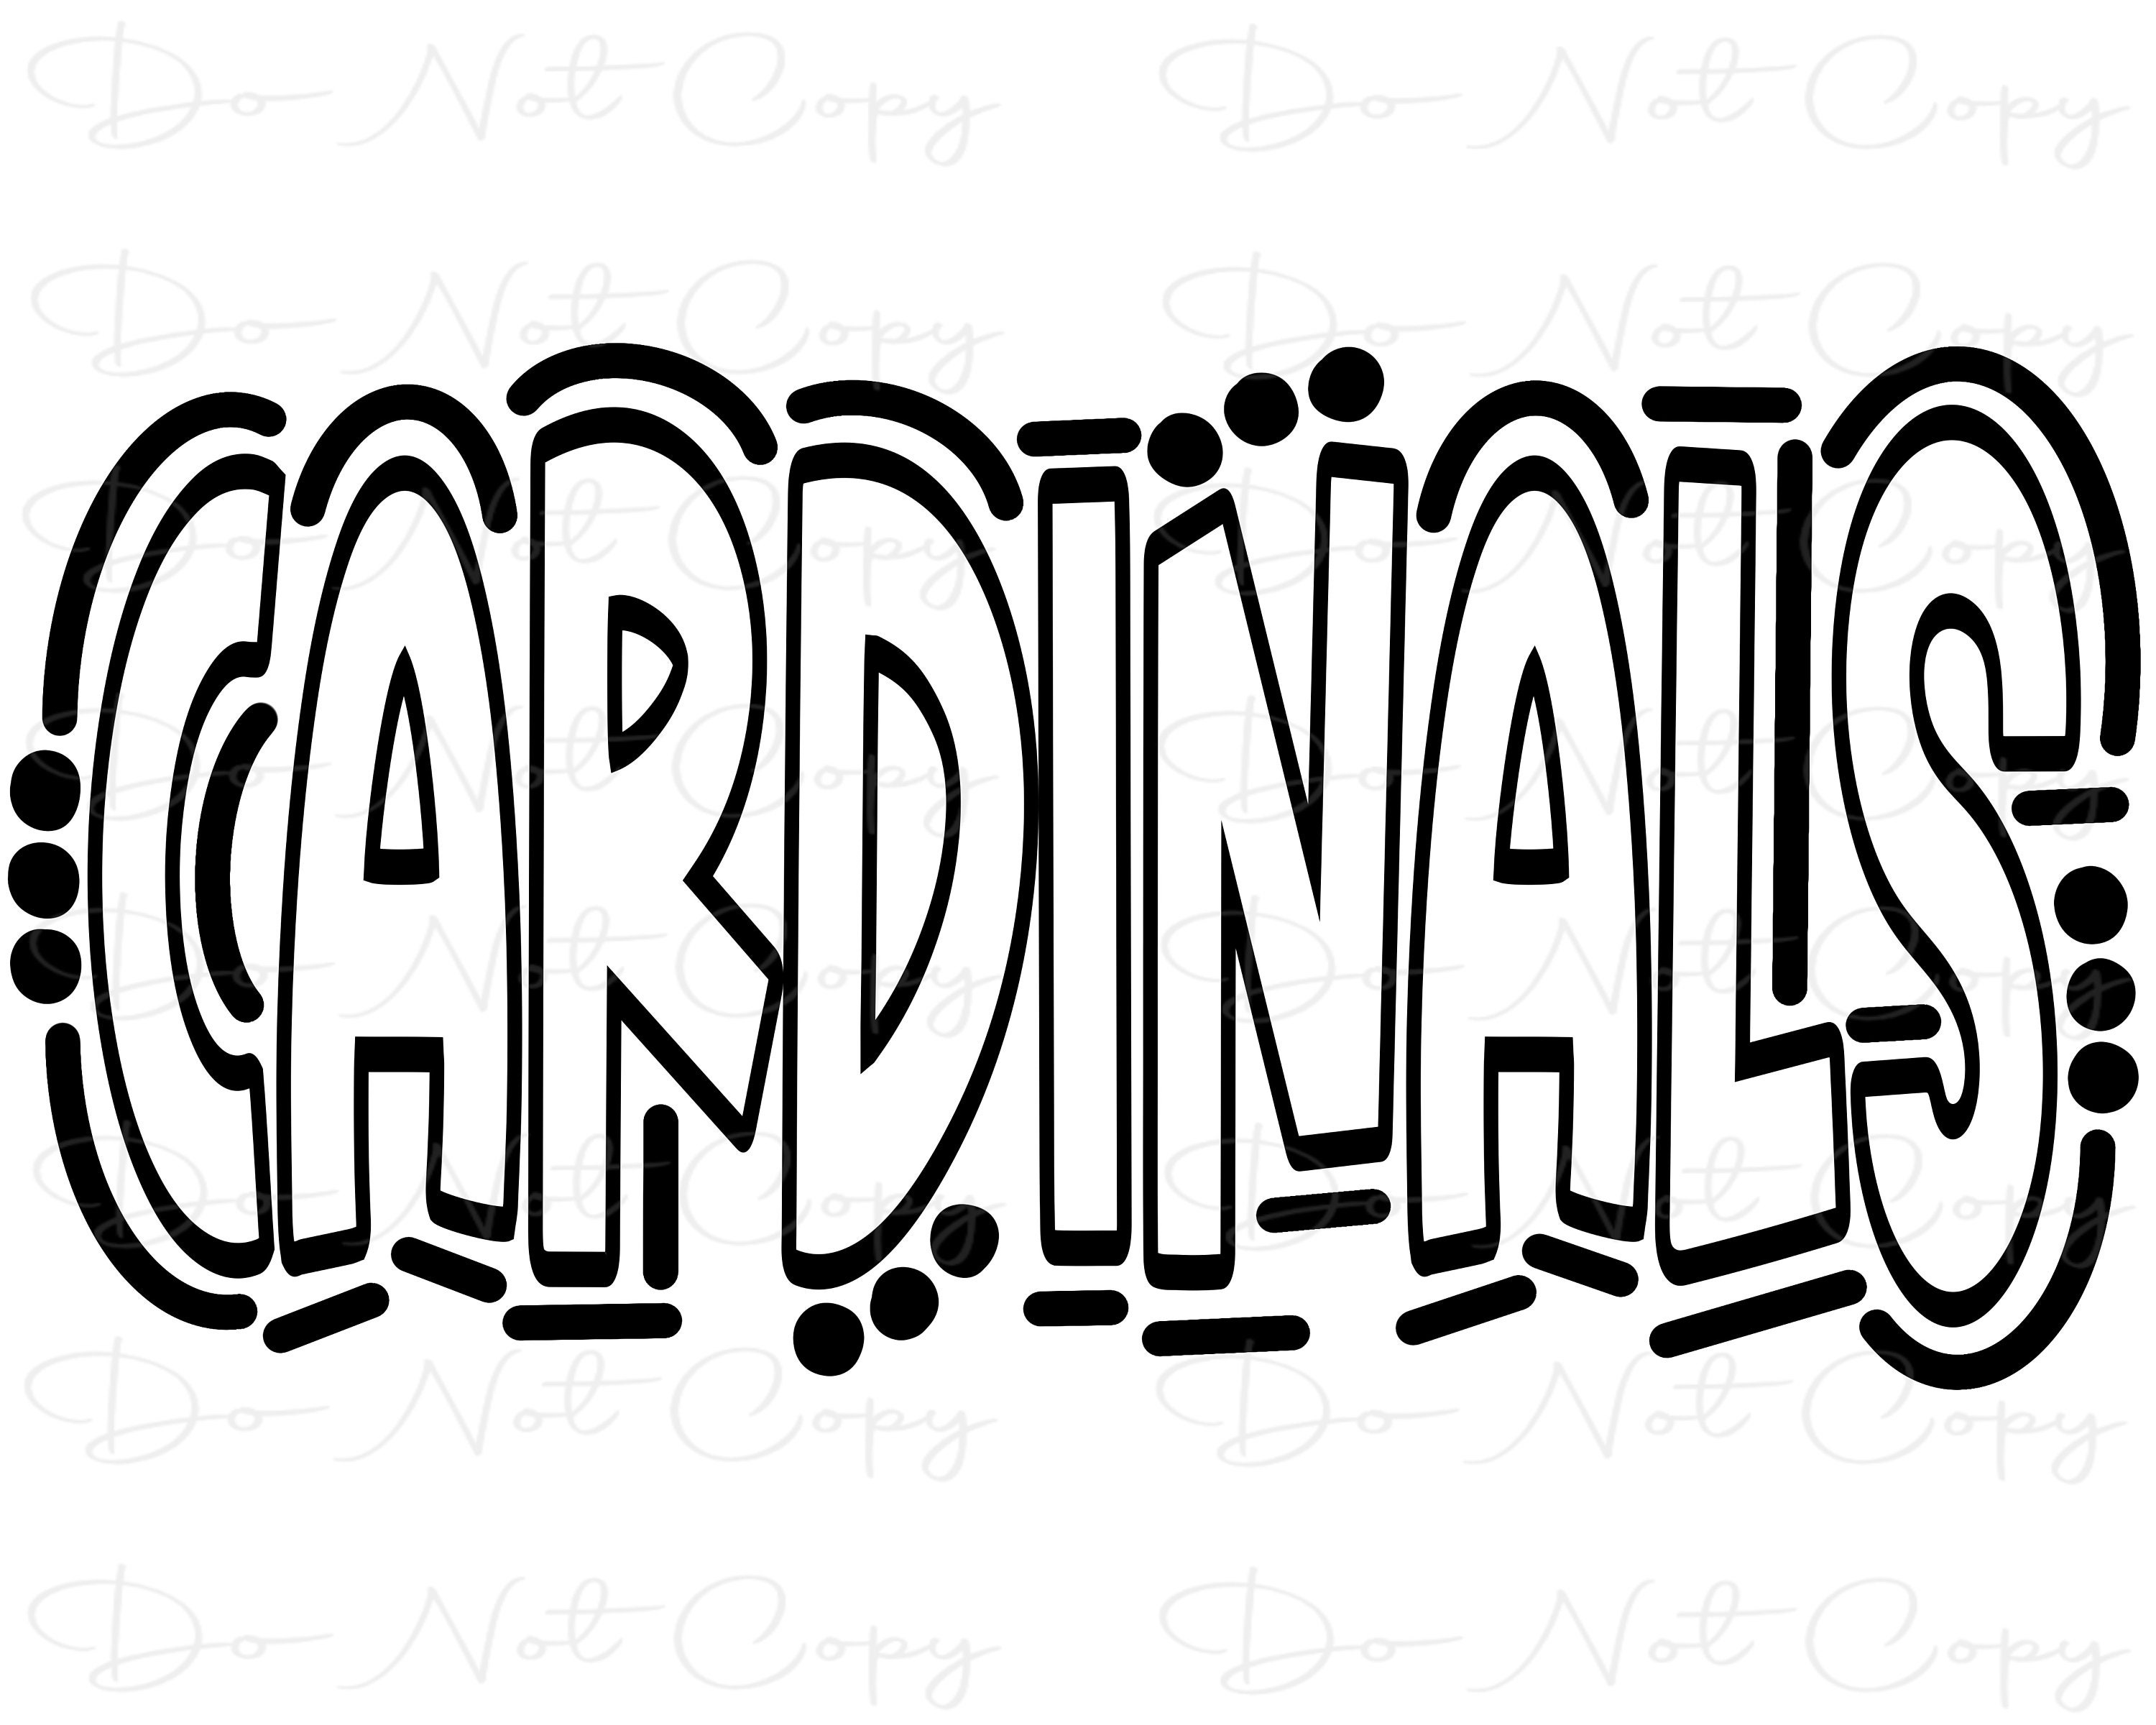 Arizona Cardinals Coloring Pages